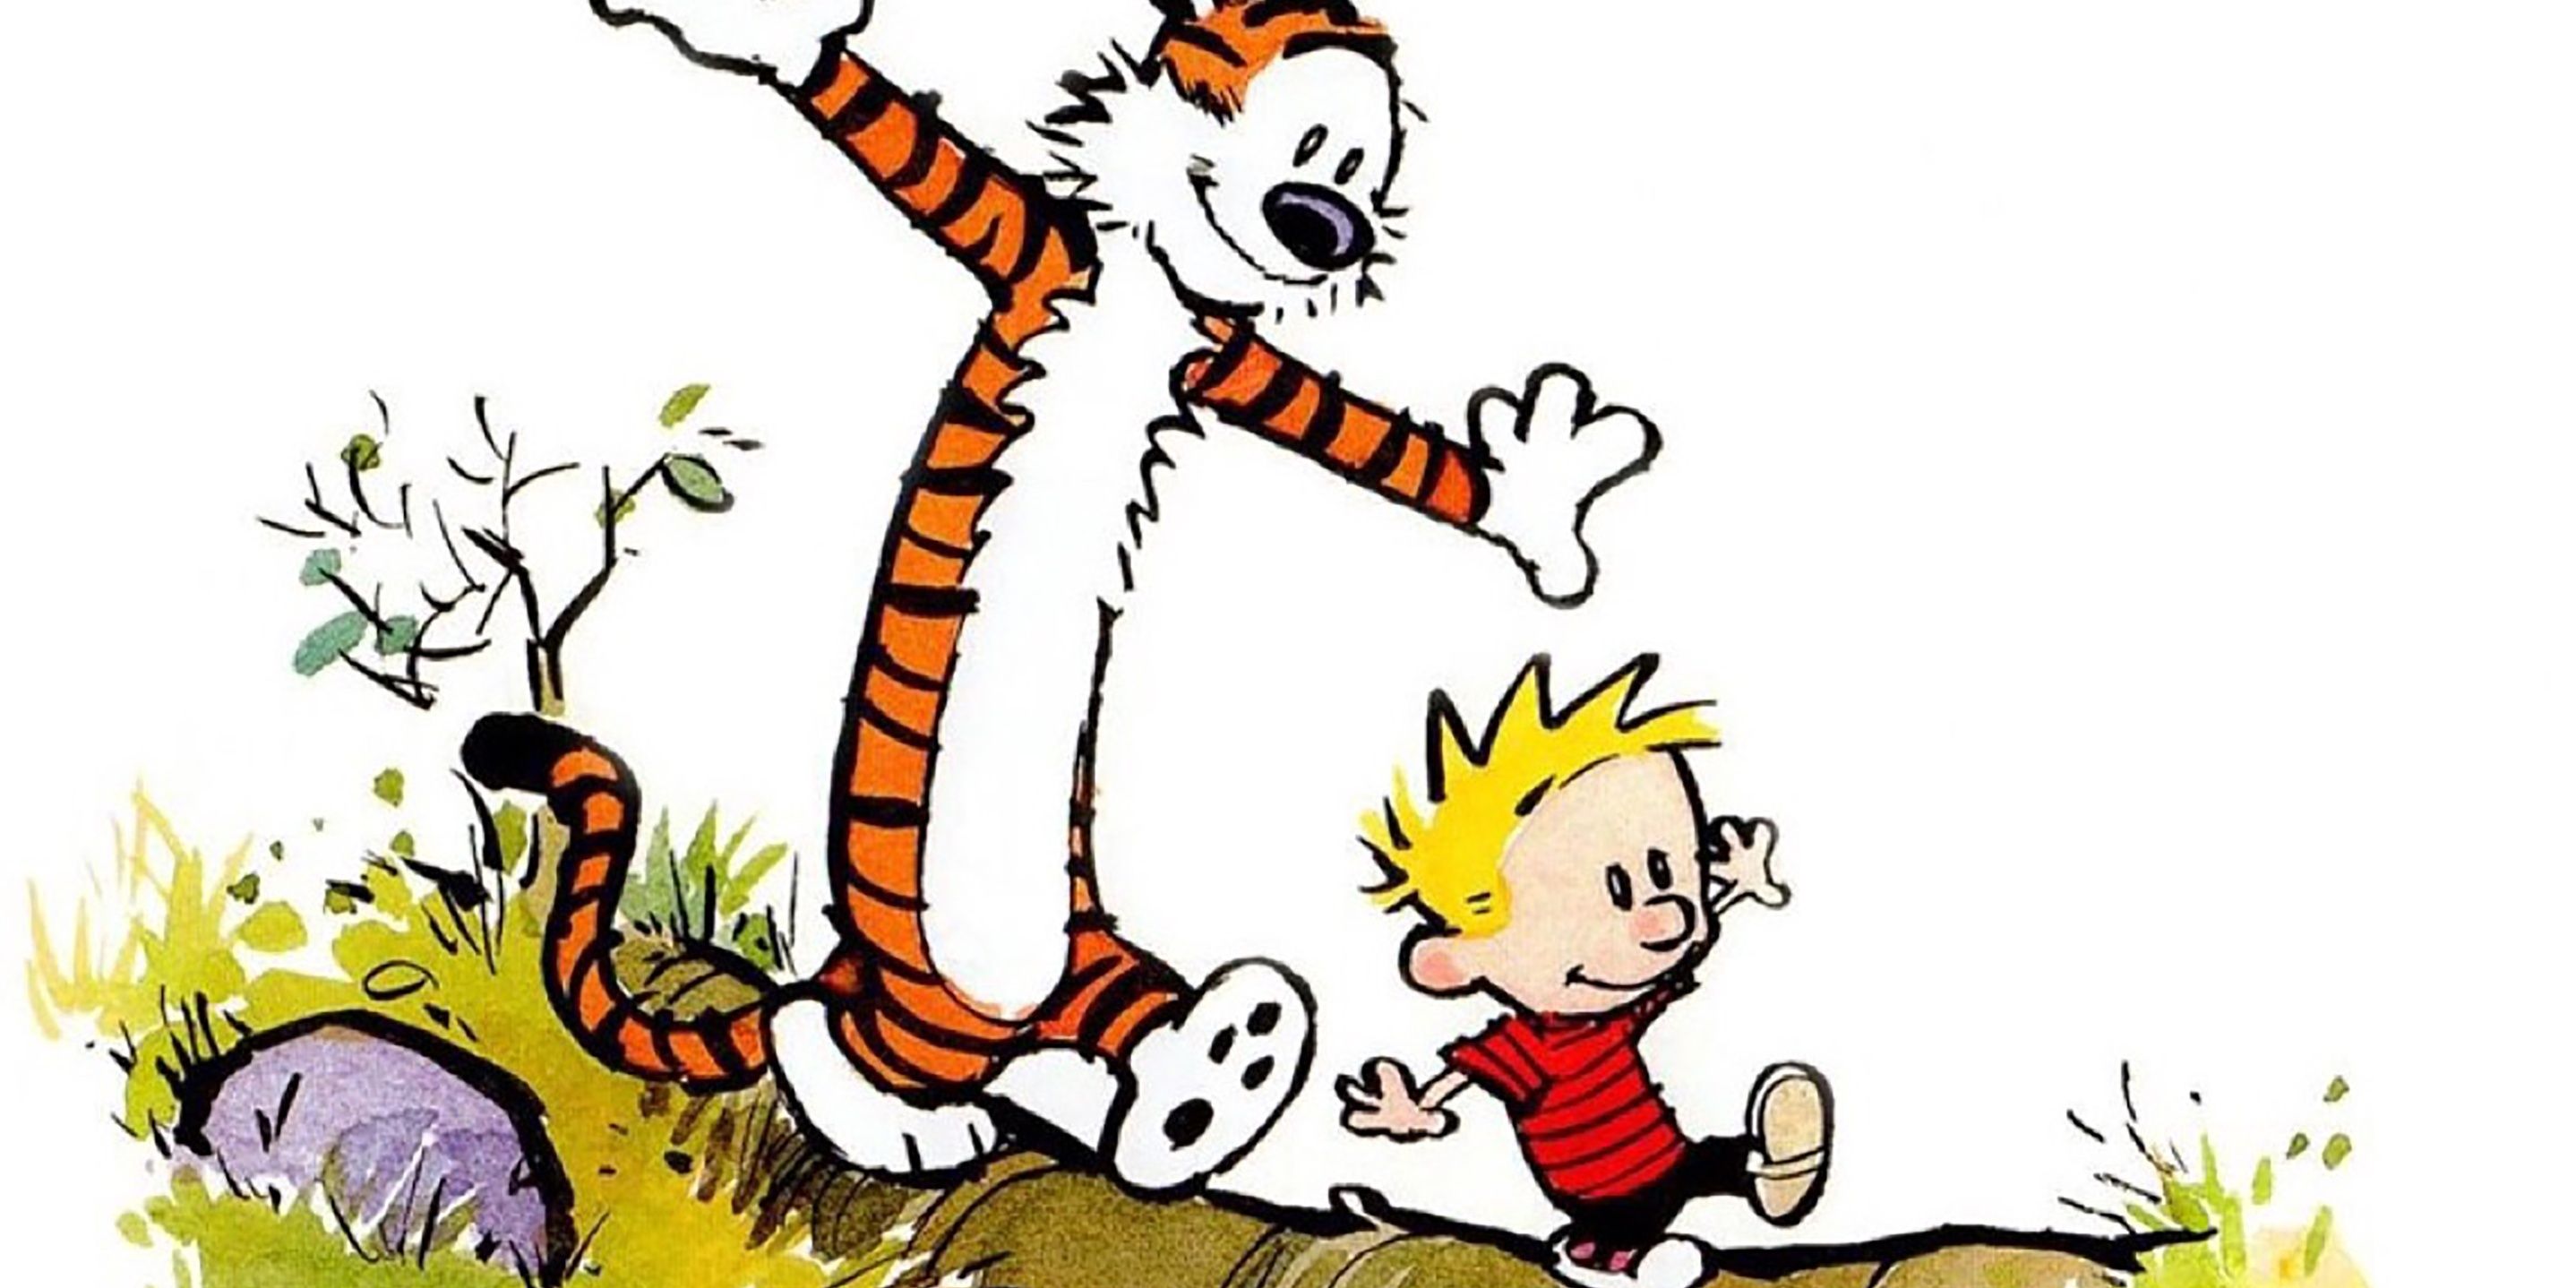 Calvin and Hobbes enjoying a Childhood Summer